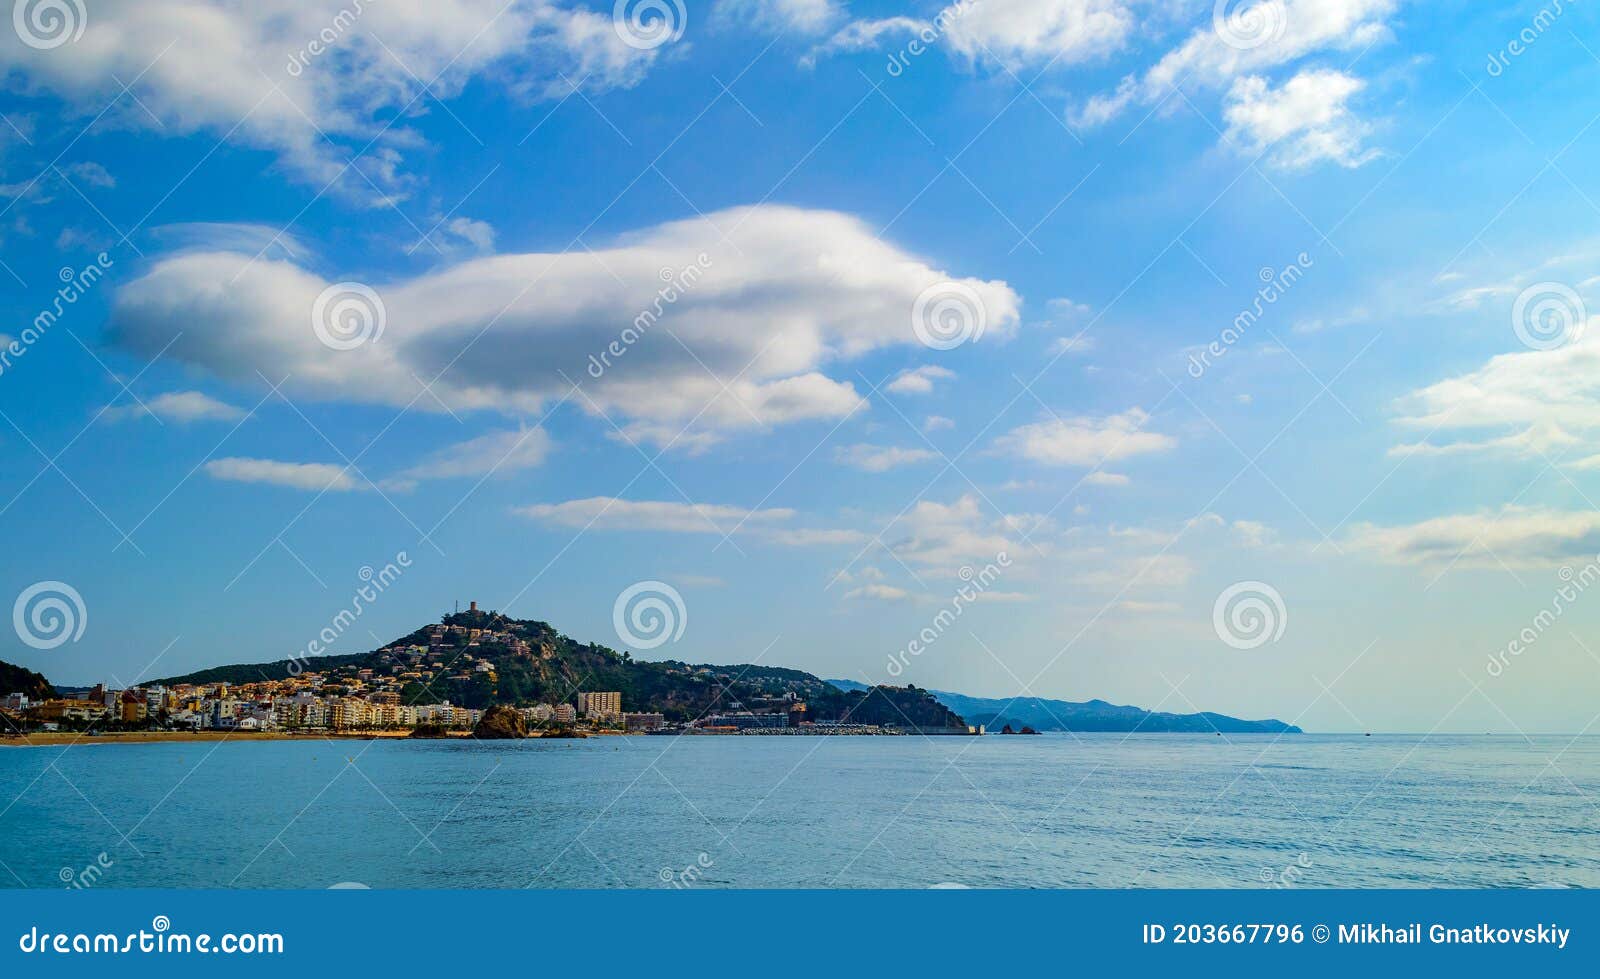 mediterranean sea coast, catalonia, spain